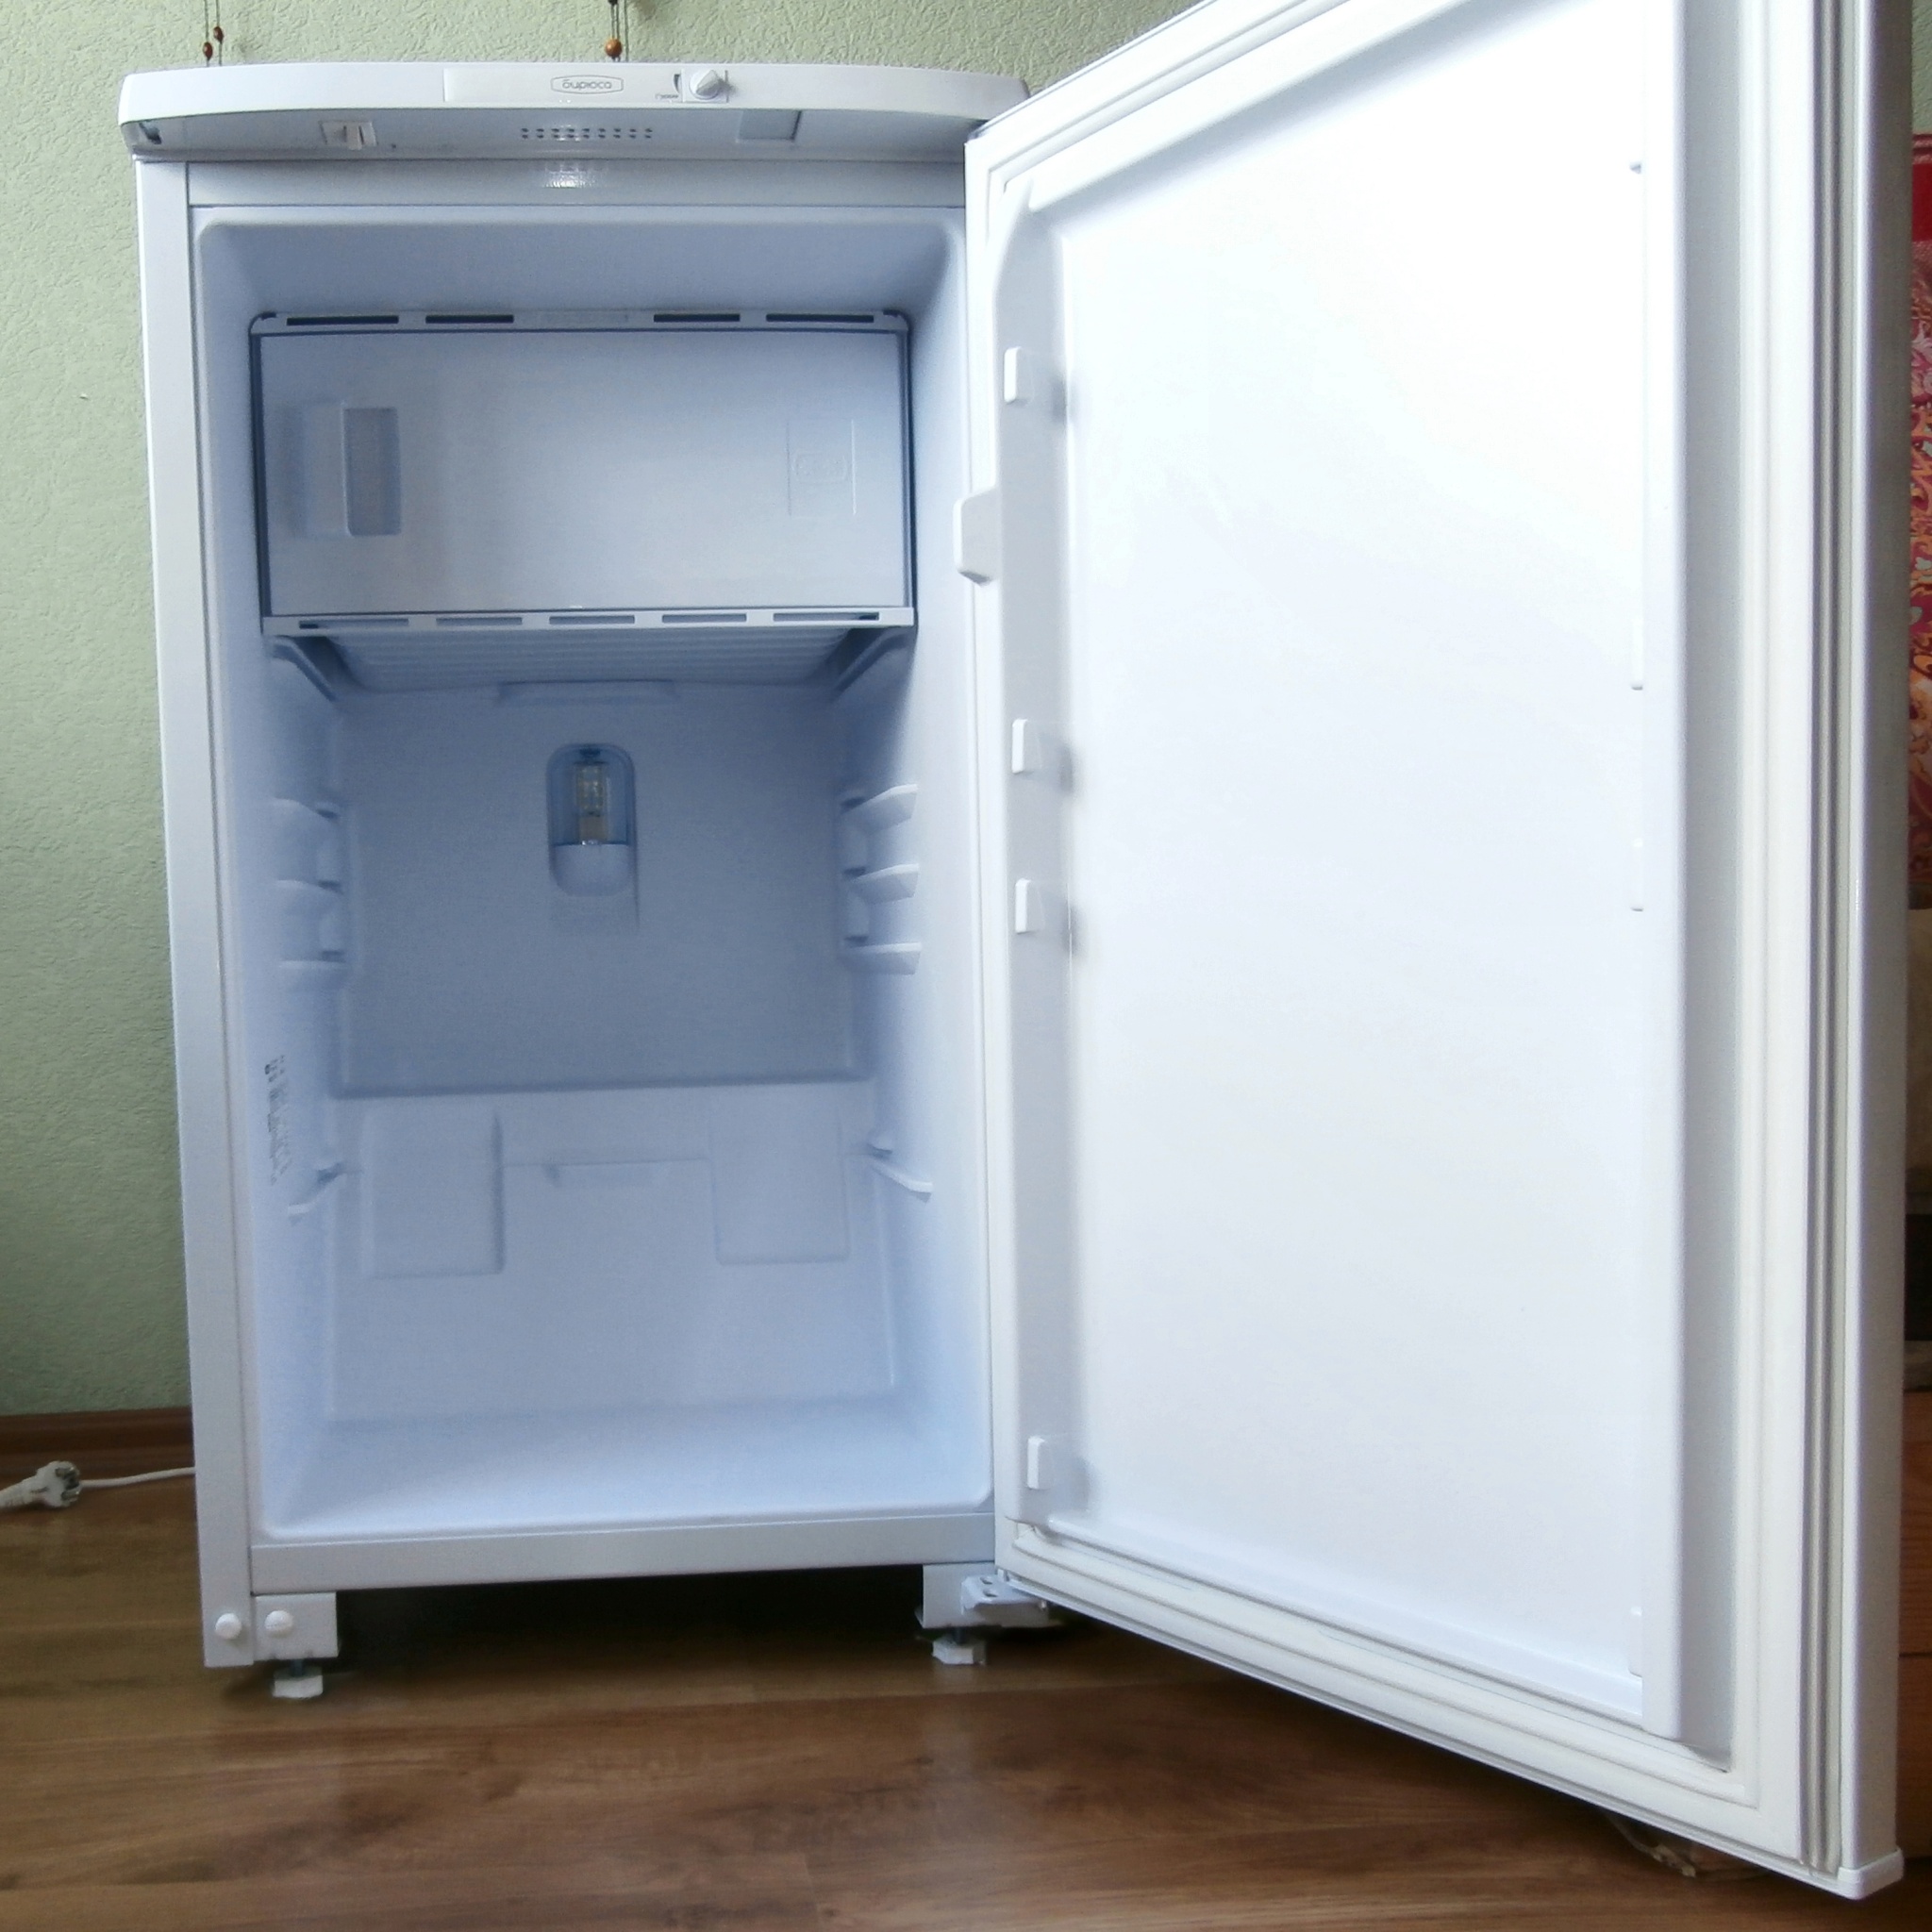 Хол бирюса. Бирюса 108. Холодильник Бирюса m108. Бирюса 108 холодильник маленький. Мини холодильник Бирюса м108.